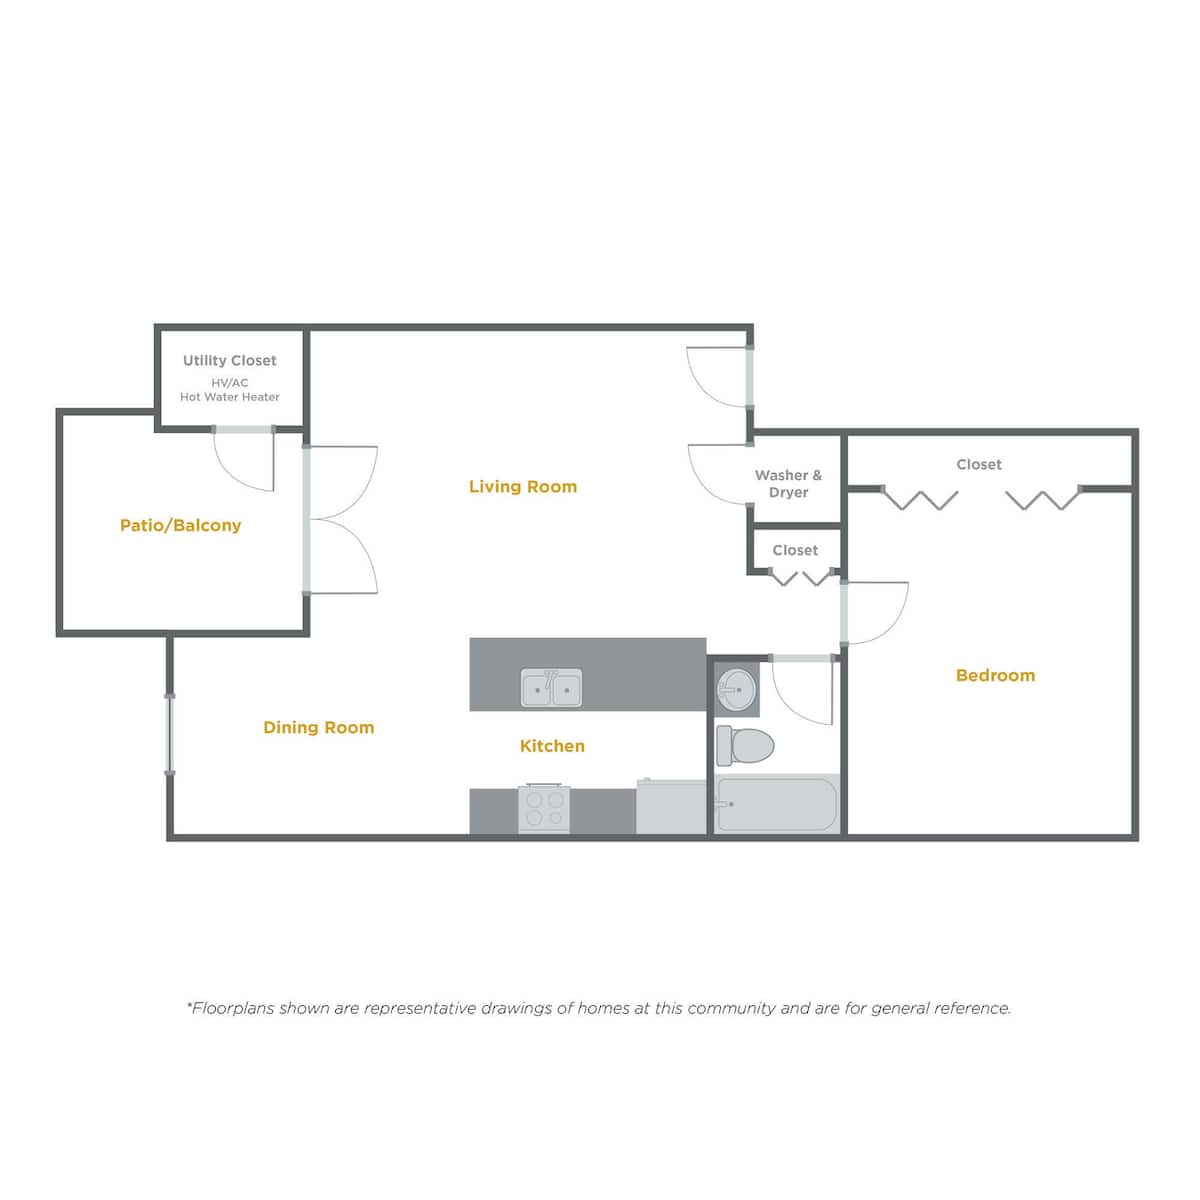 Floorplan diagram for a6, showing 1 bedroom